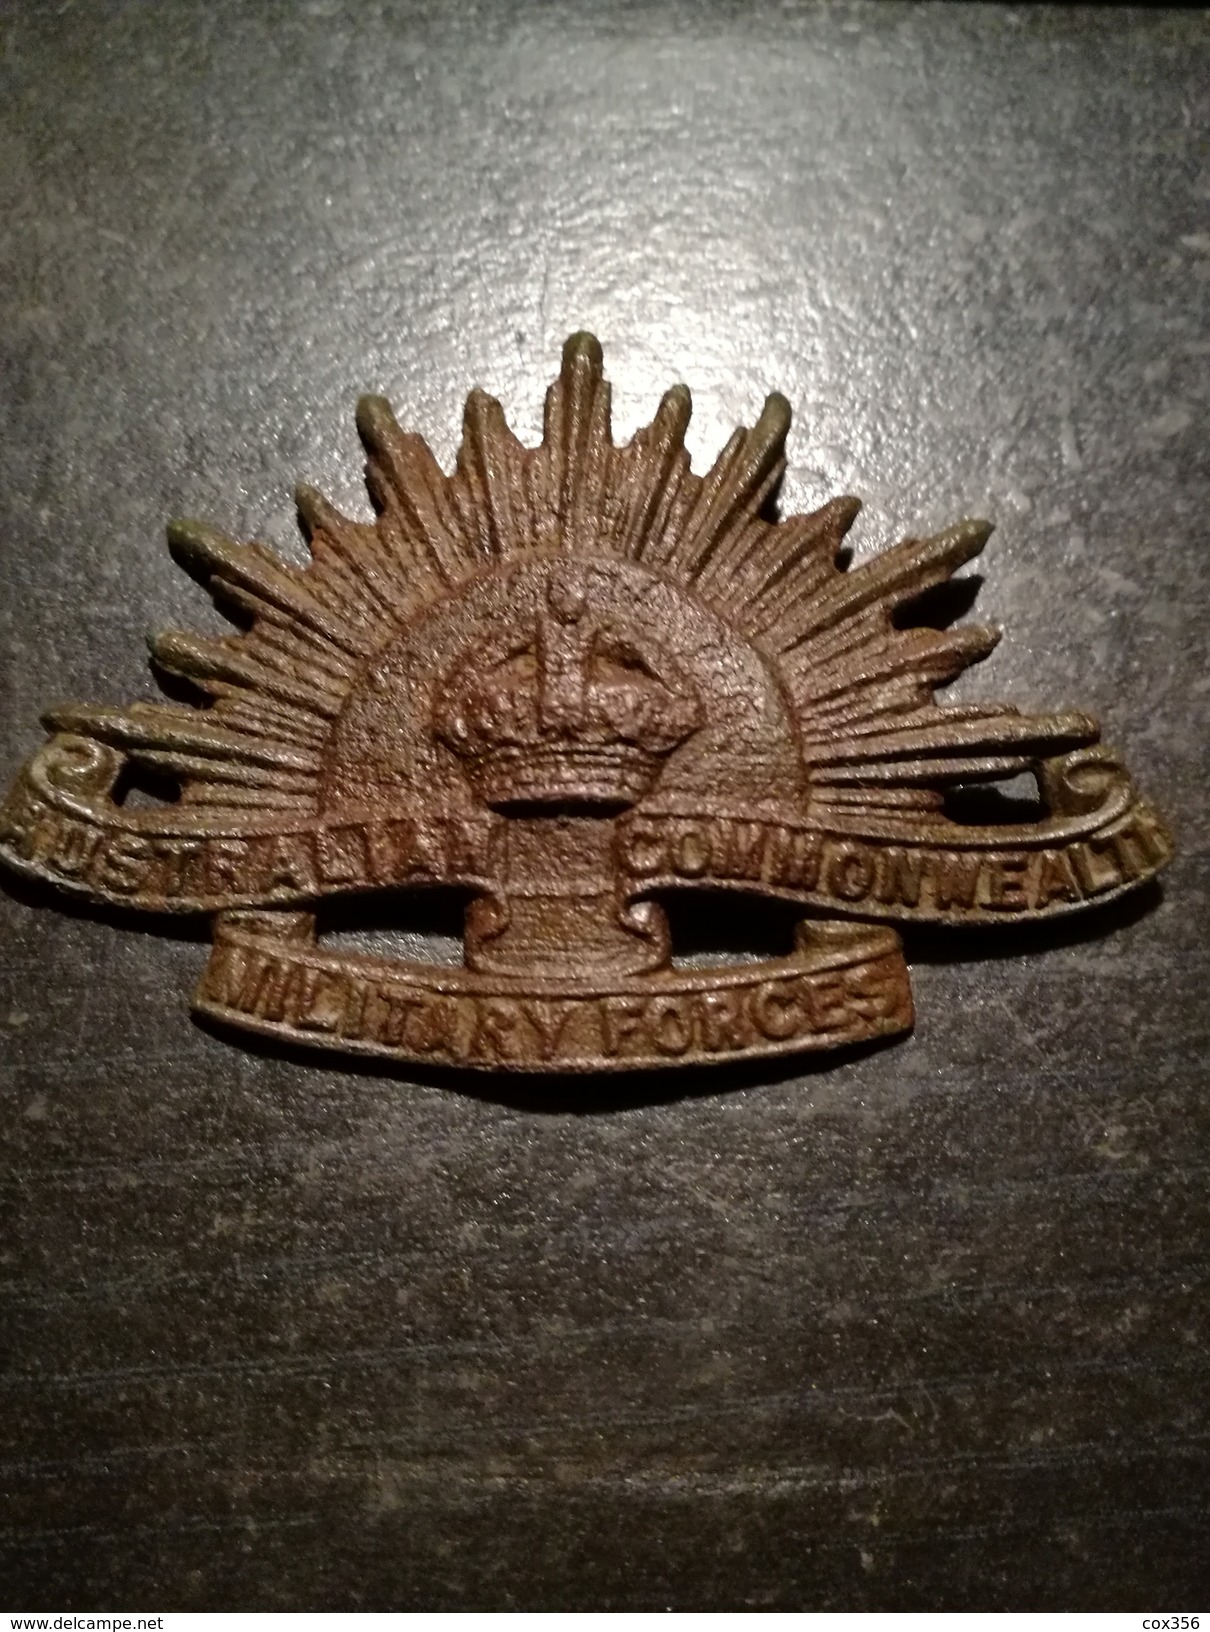 Badge Australian Commonwealth Military Forces Objet De Fouille - Gran Bretaña